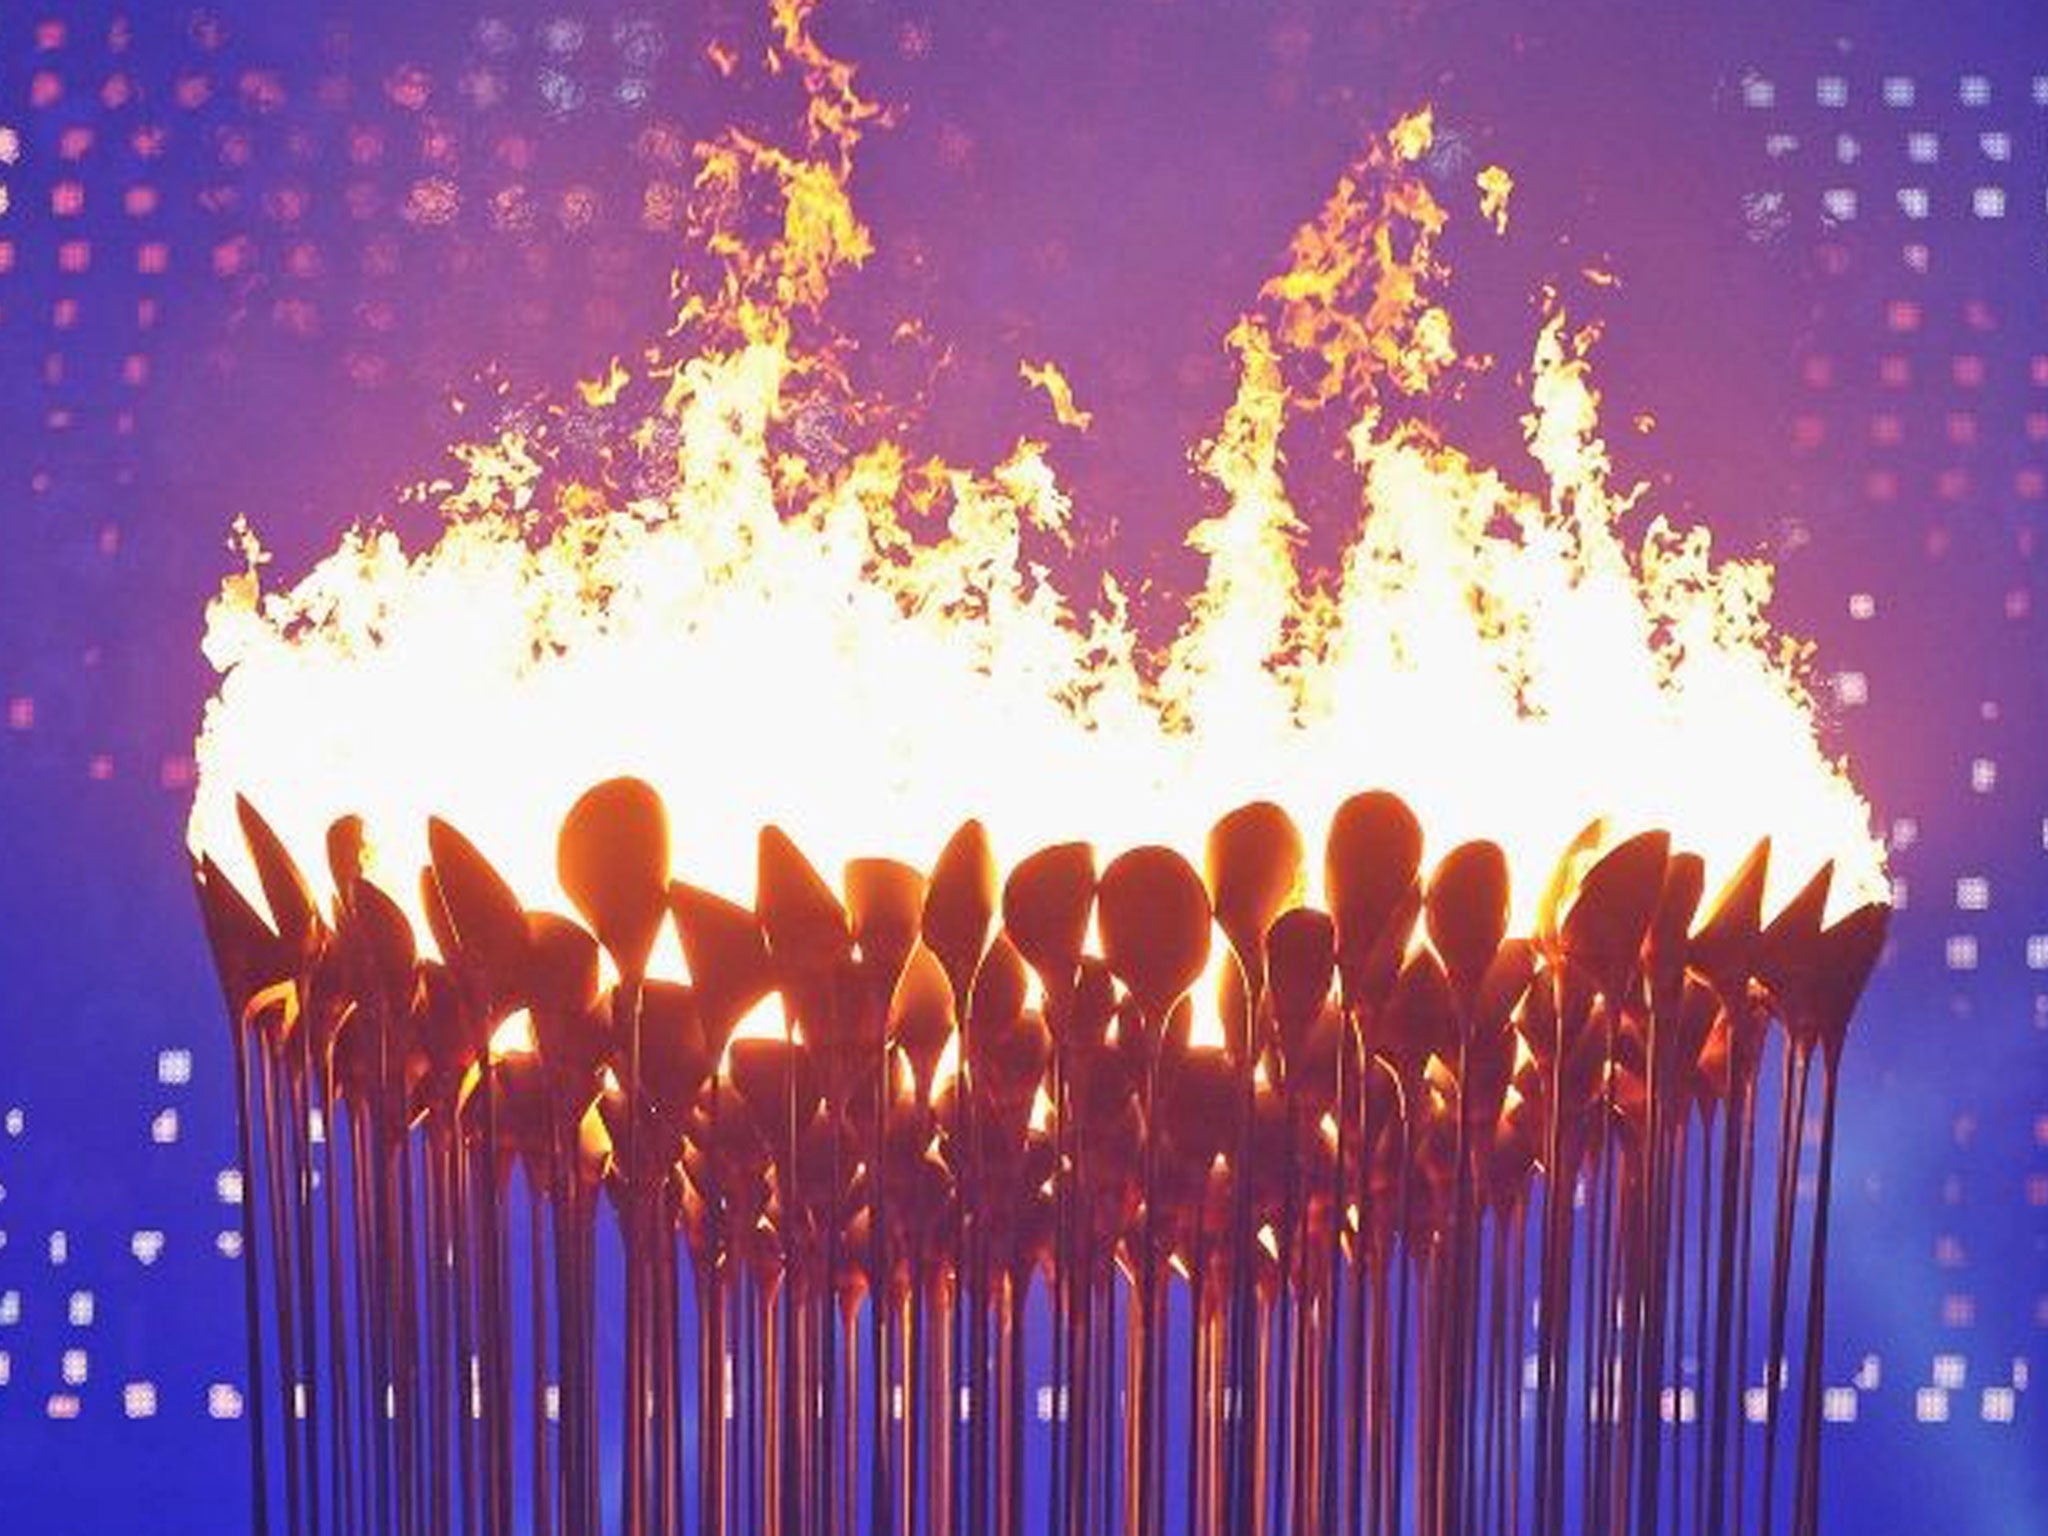 The London 2012 Olympic Cauldron